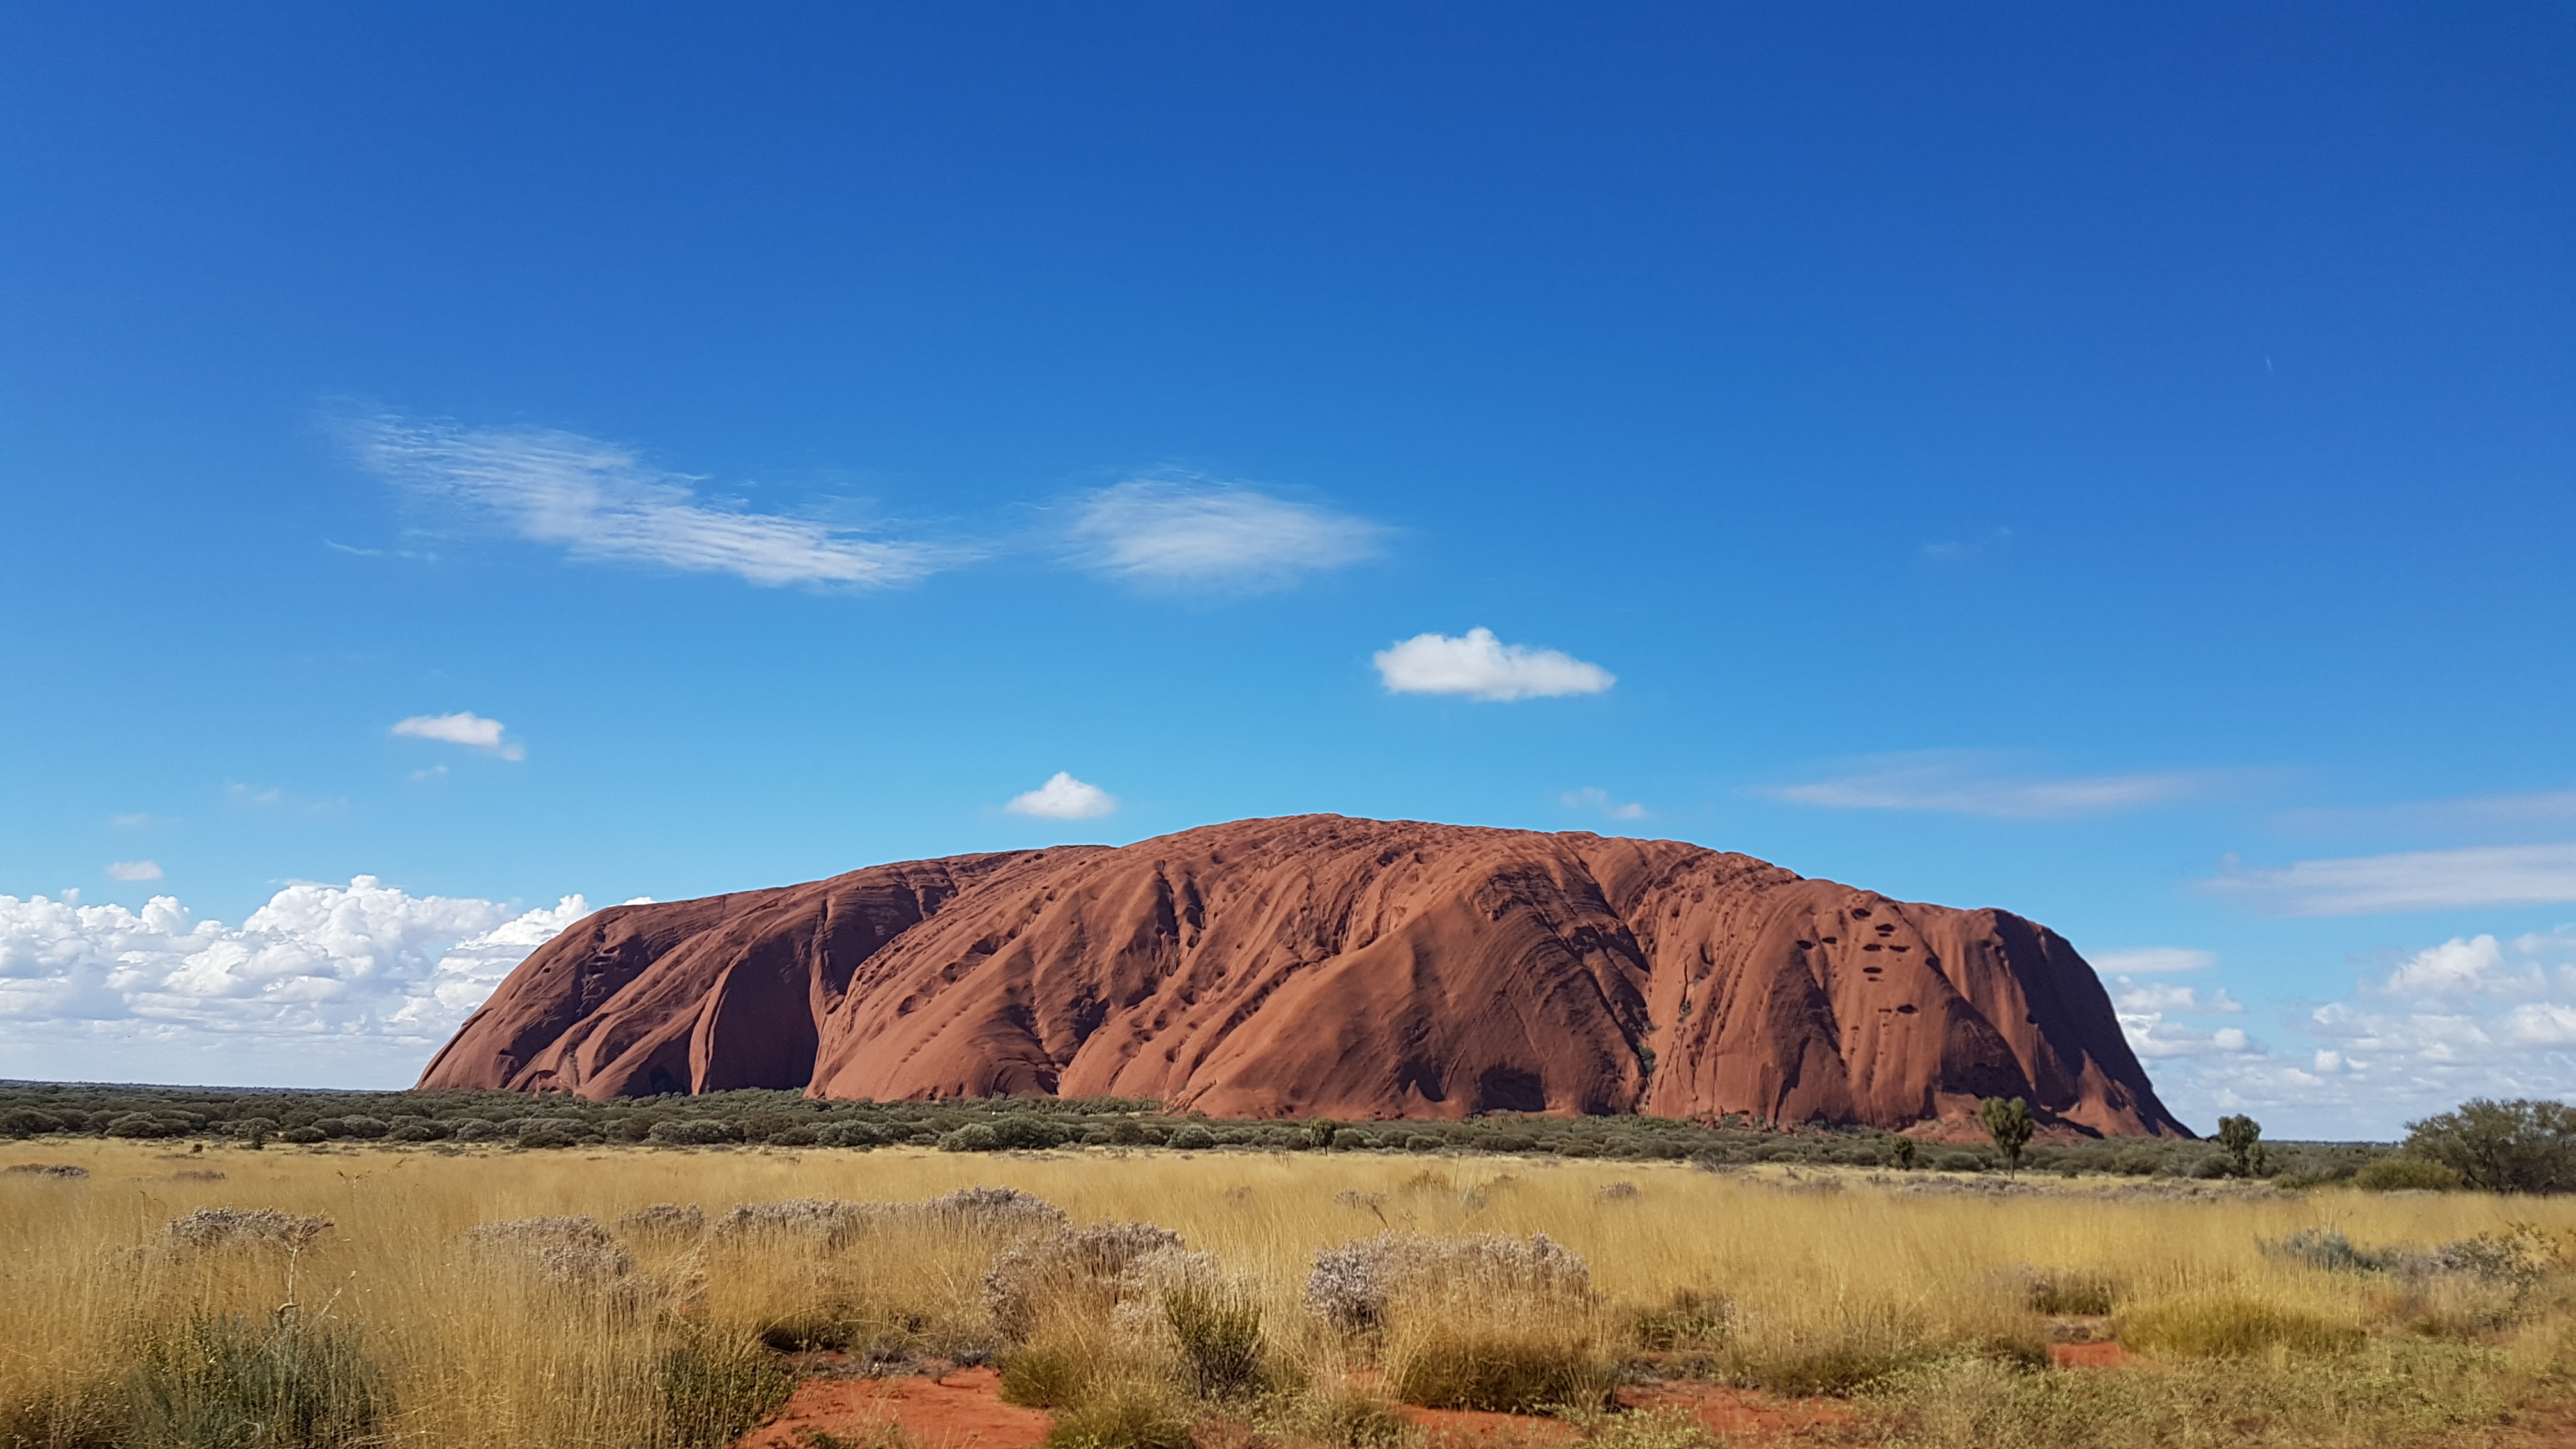 General 4032x2268 landscape desert rocks Ayers Rock Australia Uluru Outback